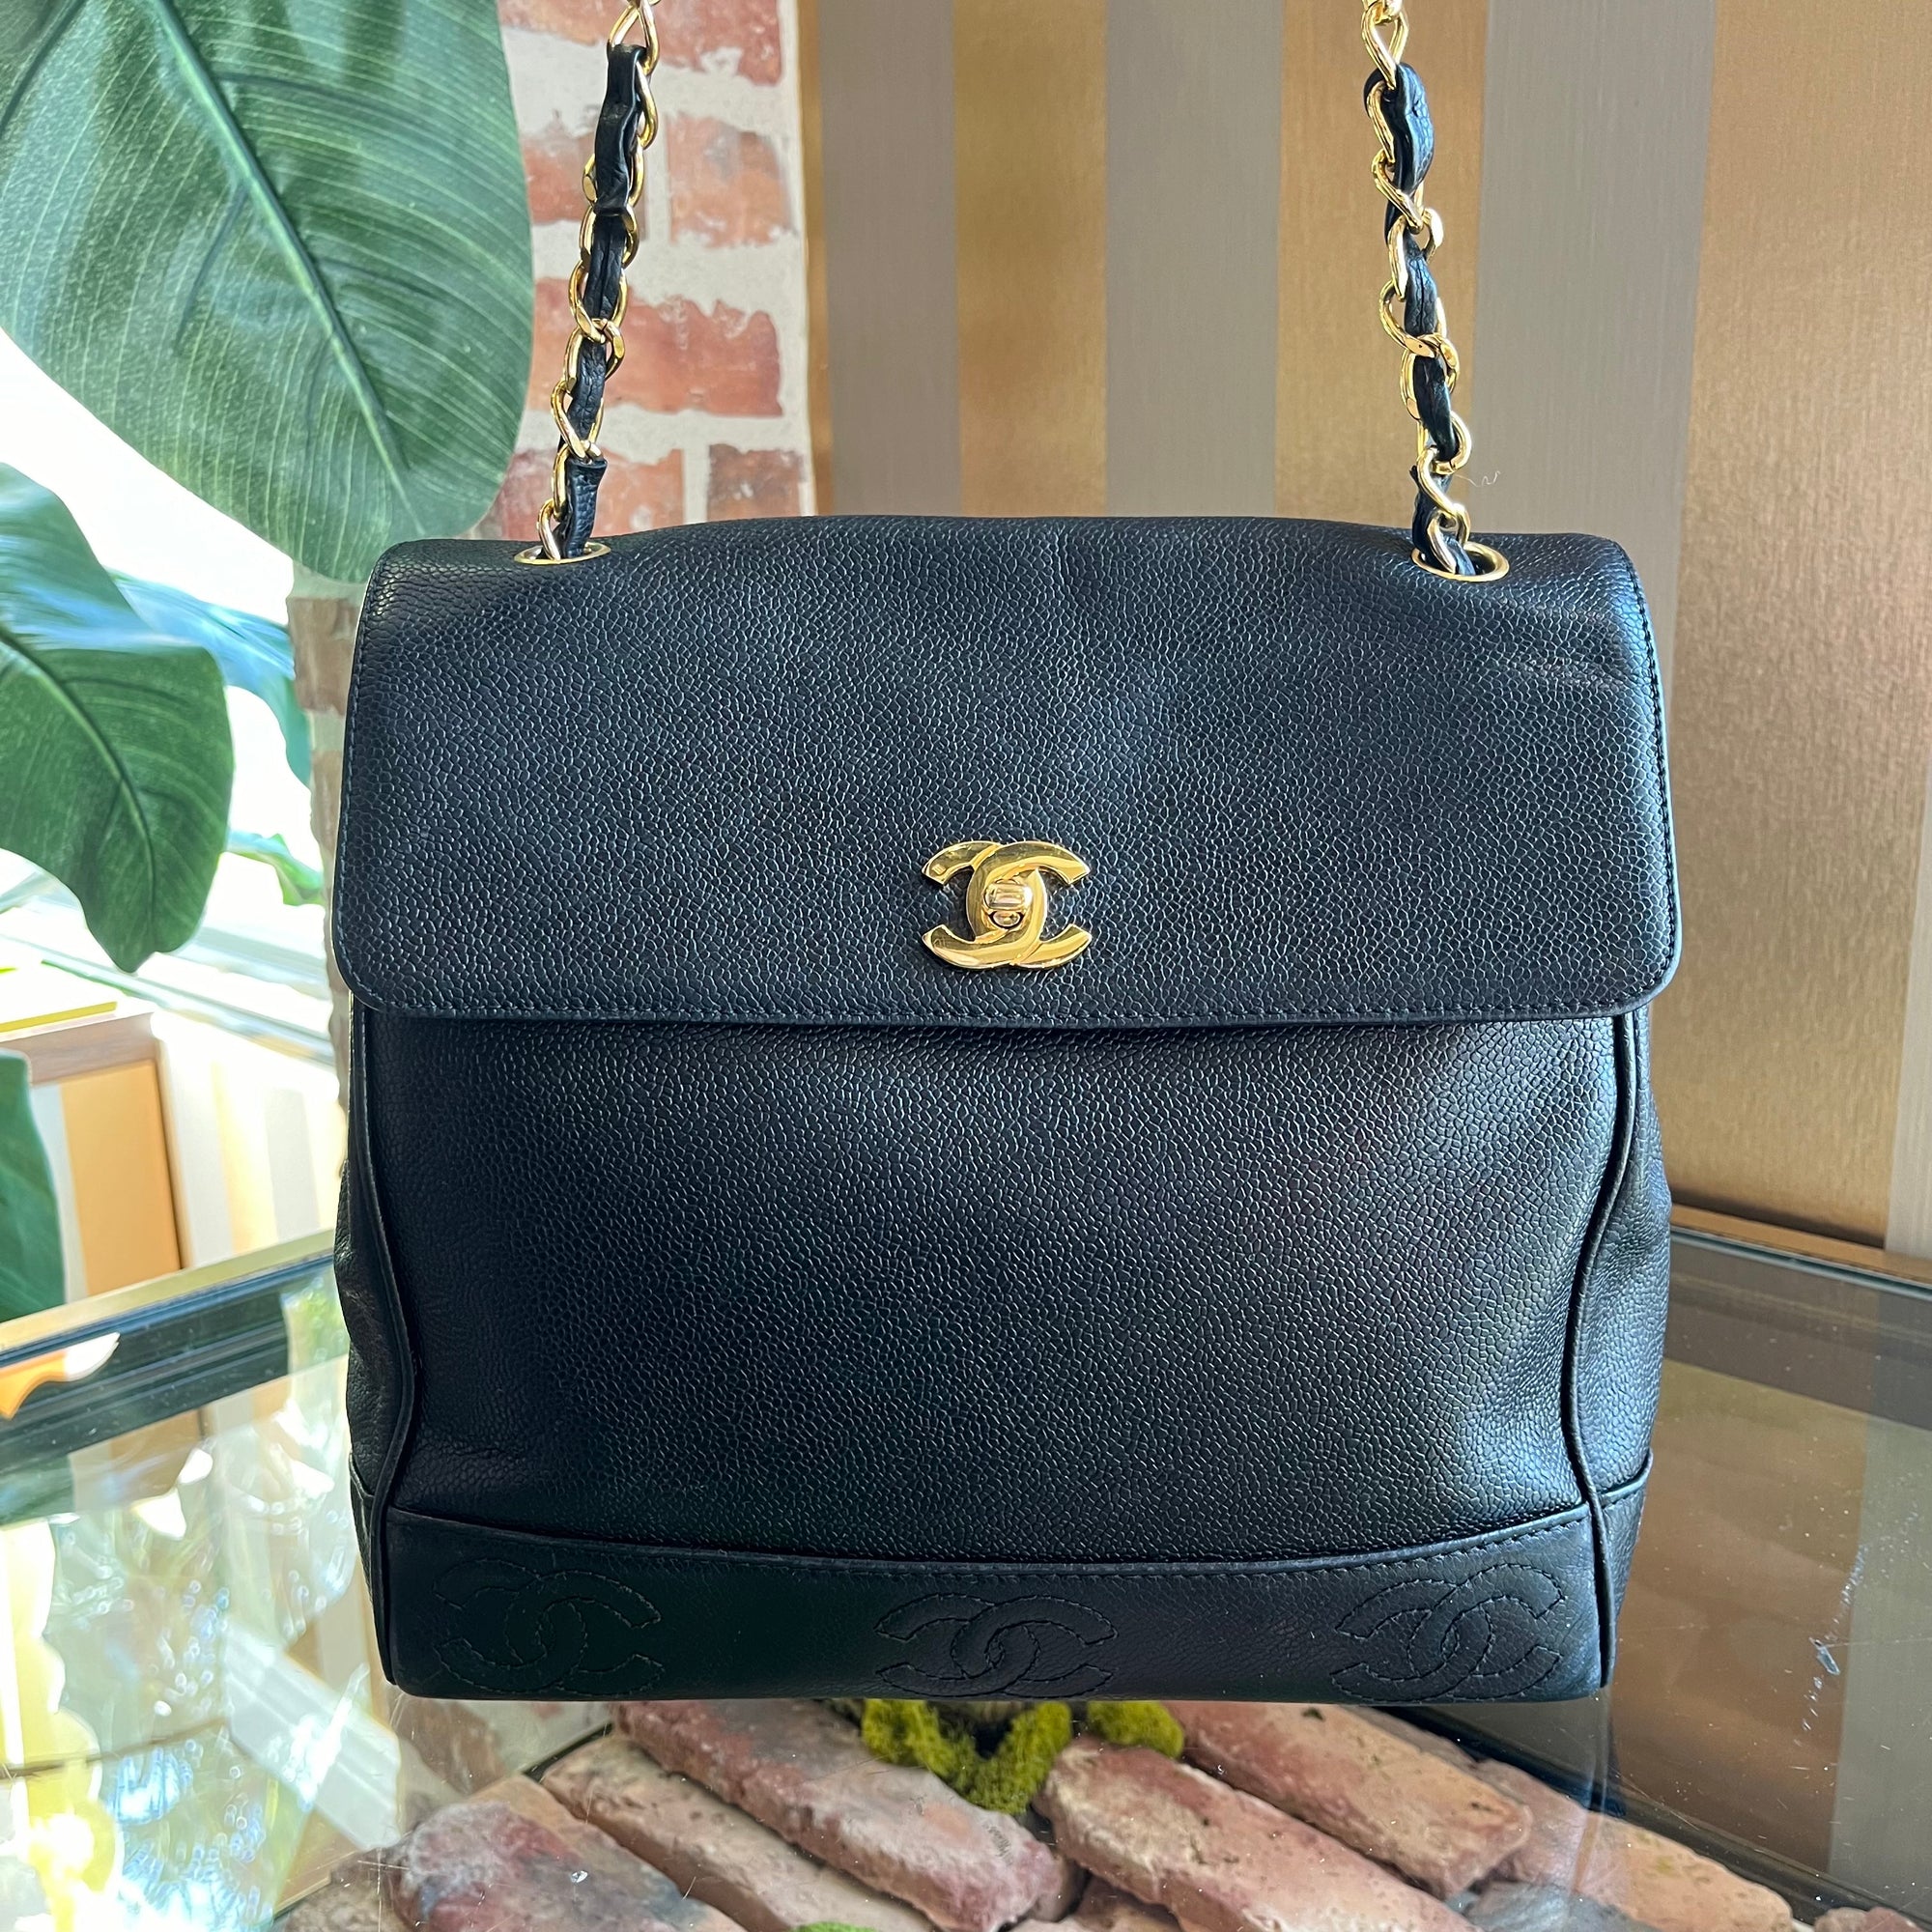 Chanel Black Caviar Chain Shoulder Bag